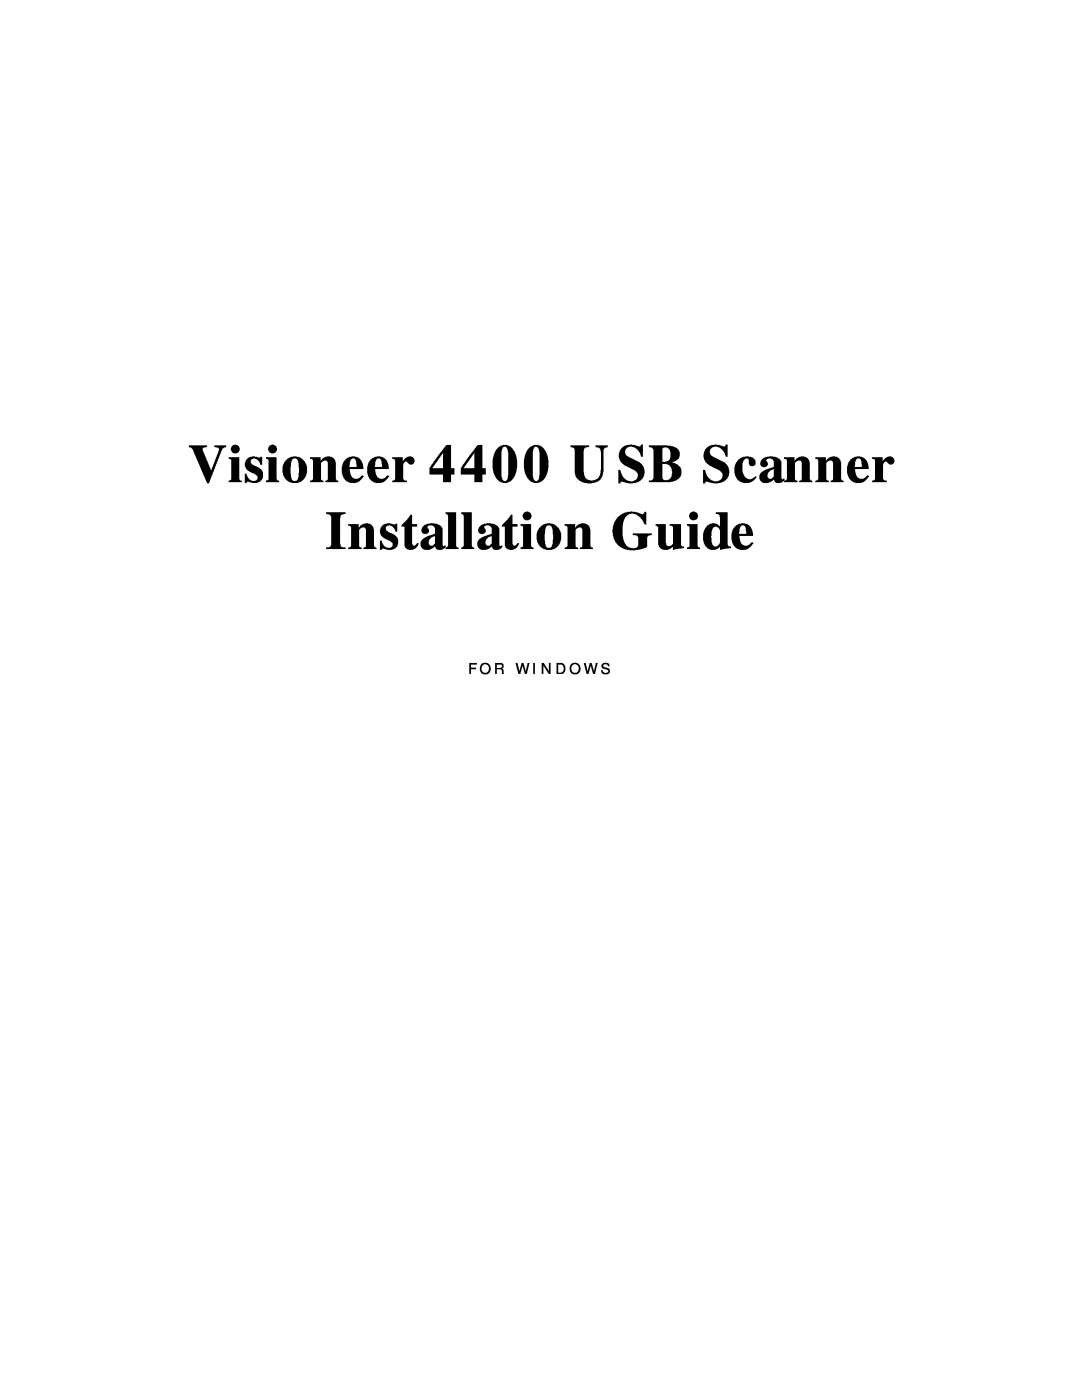 Visioneer manual Visioneer 4400 USB Scanner Installation Guide, F O R W I N D O W S 